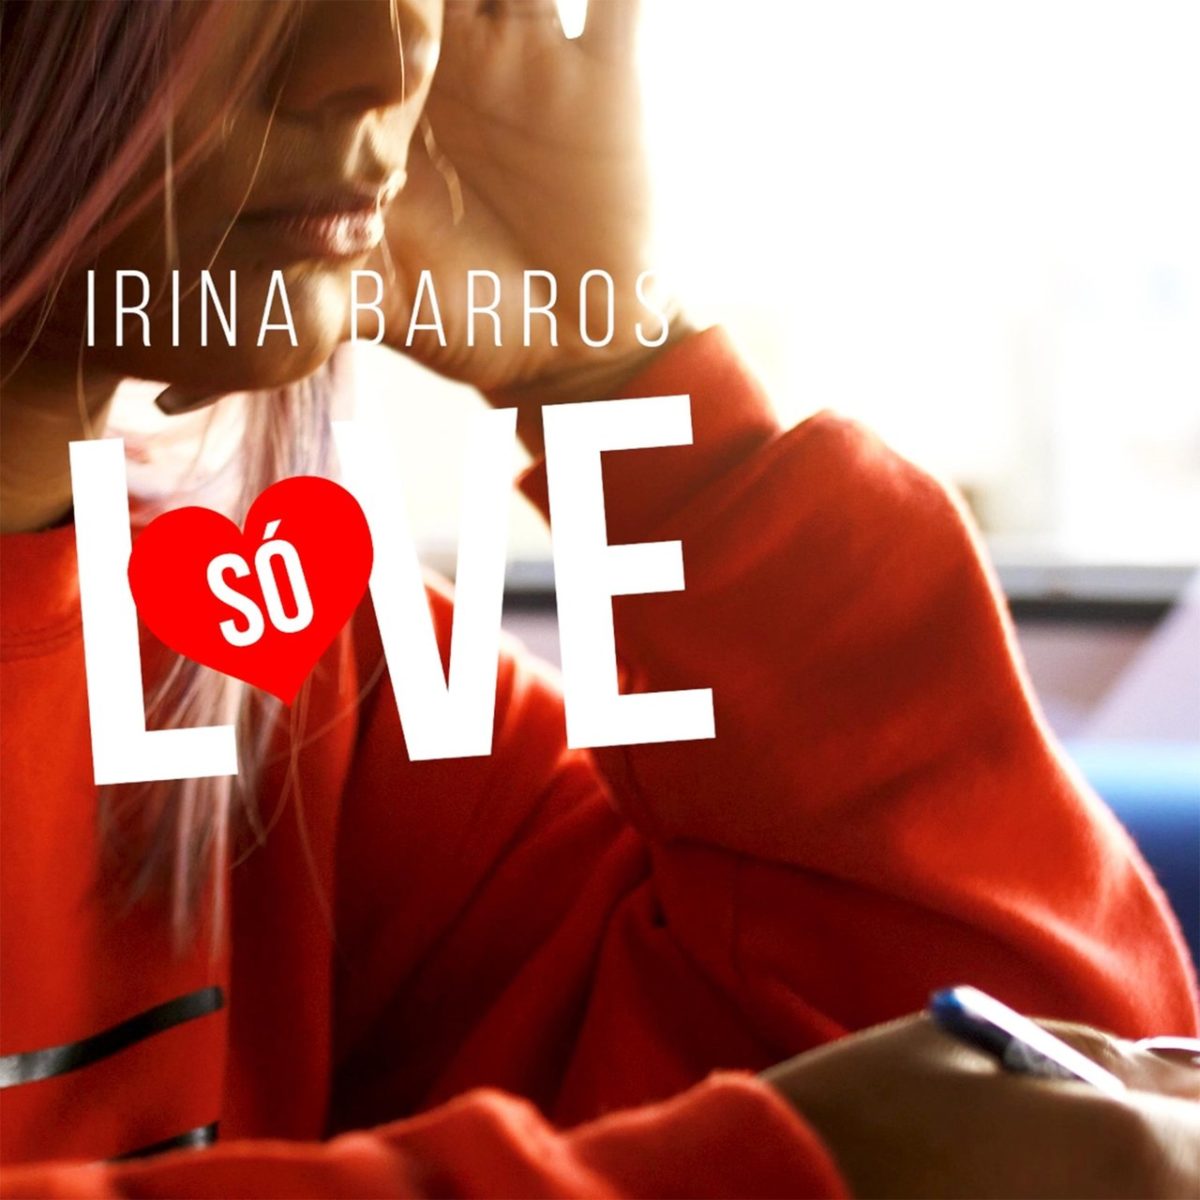 Irina Barros - Só Love (Cover)